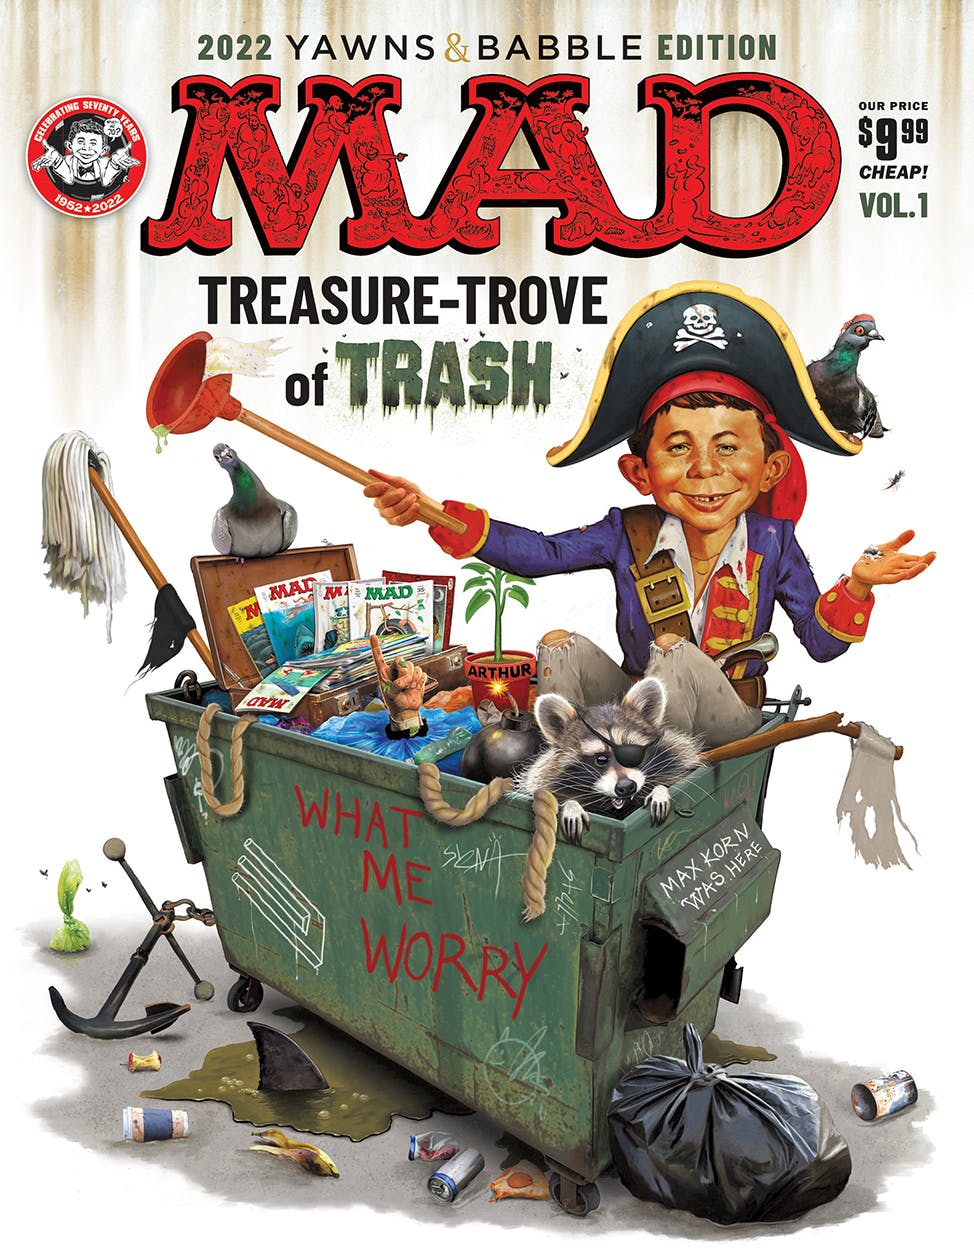 Mad Magazine cover